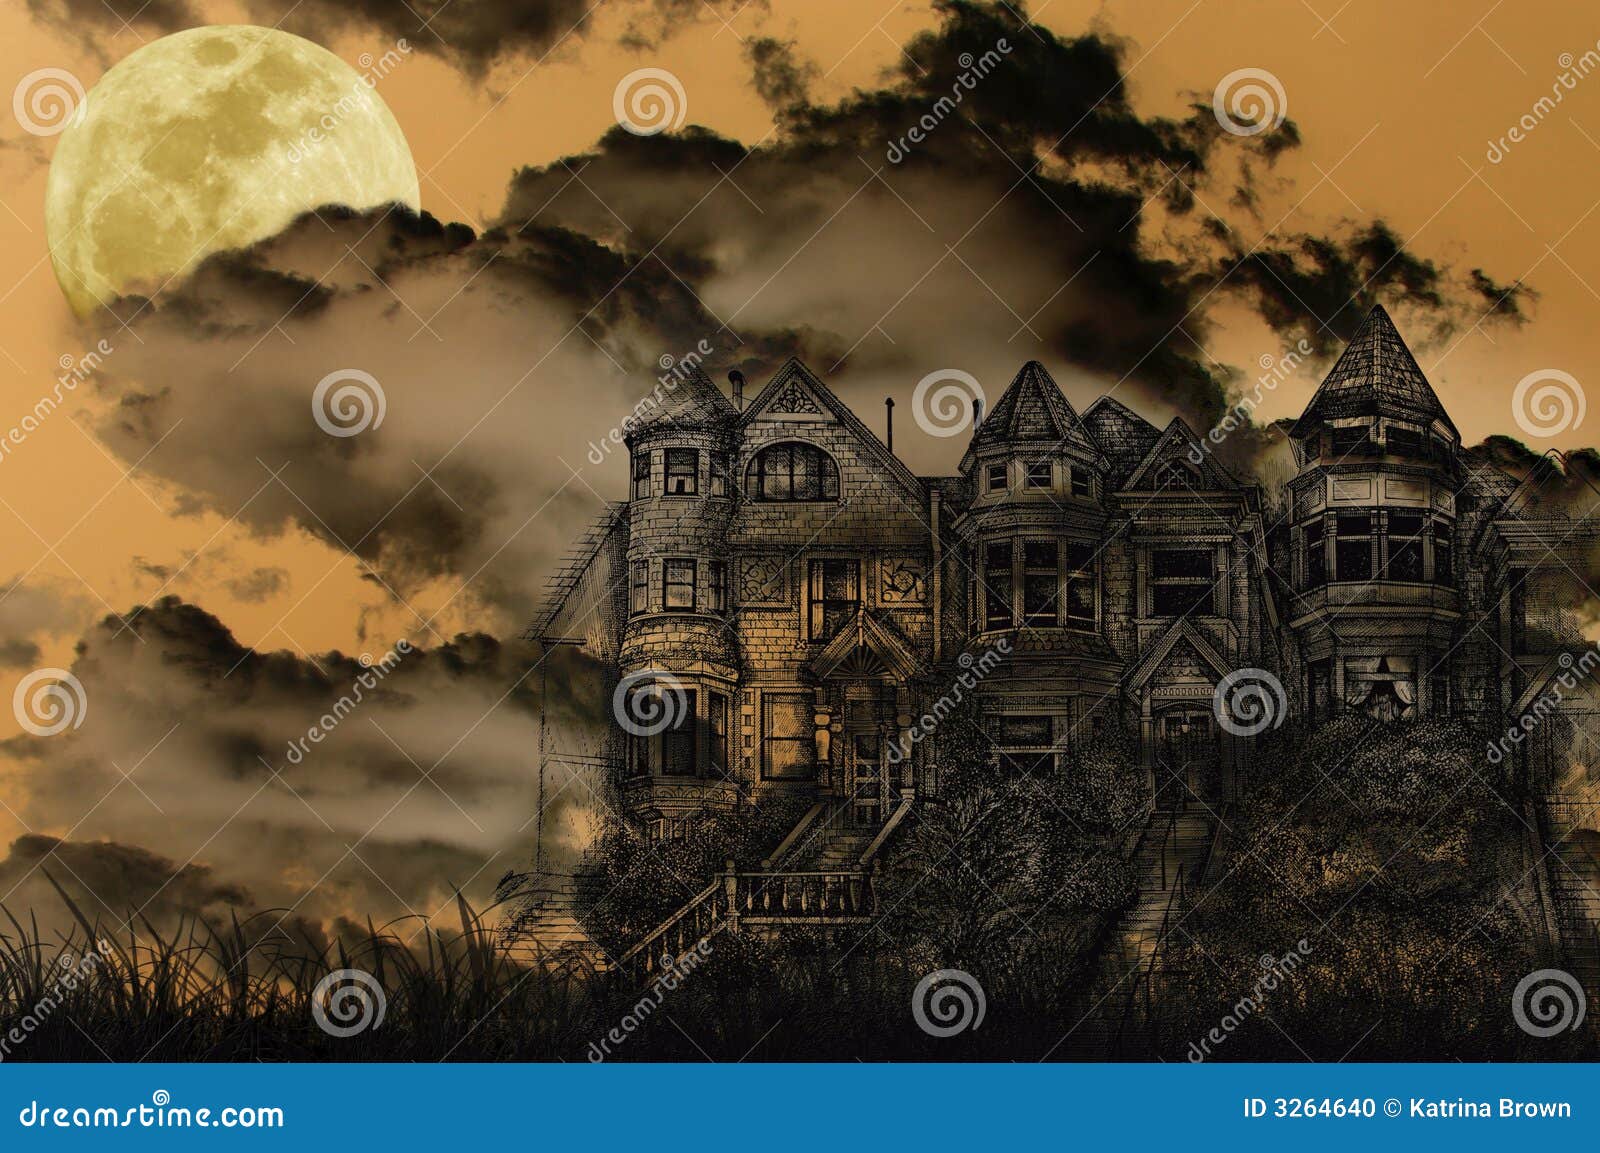 haunted halloween mansion